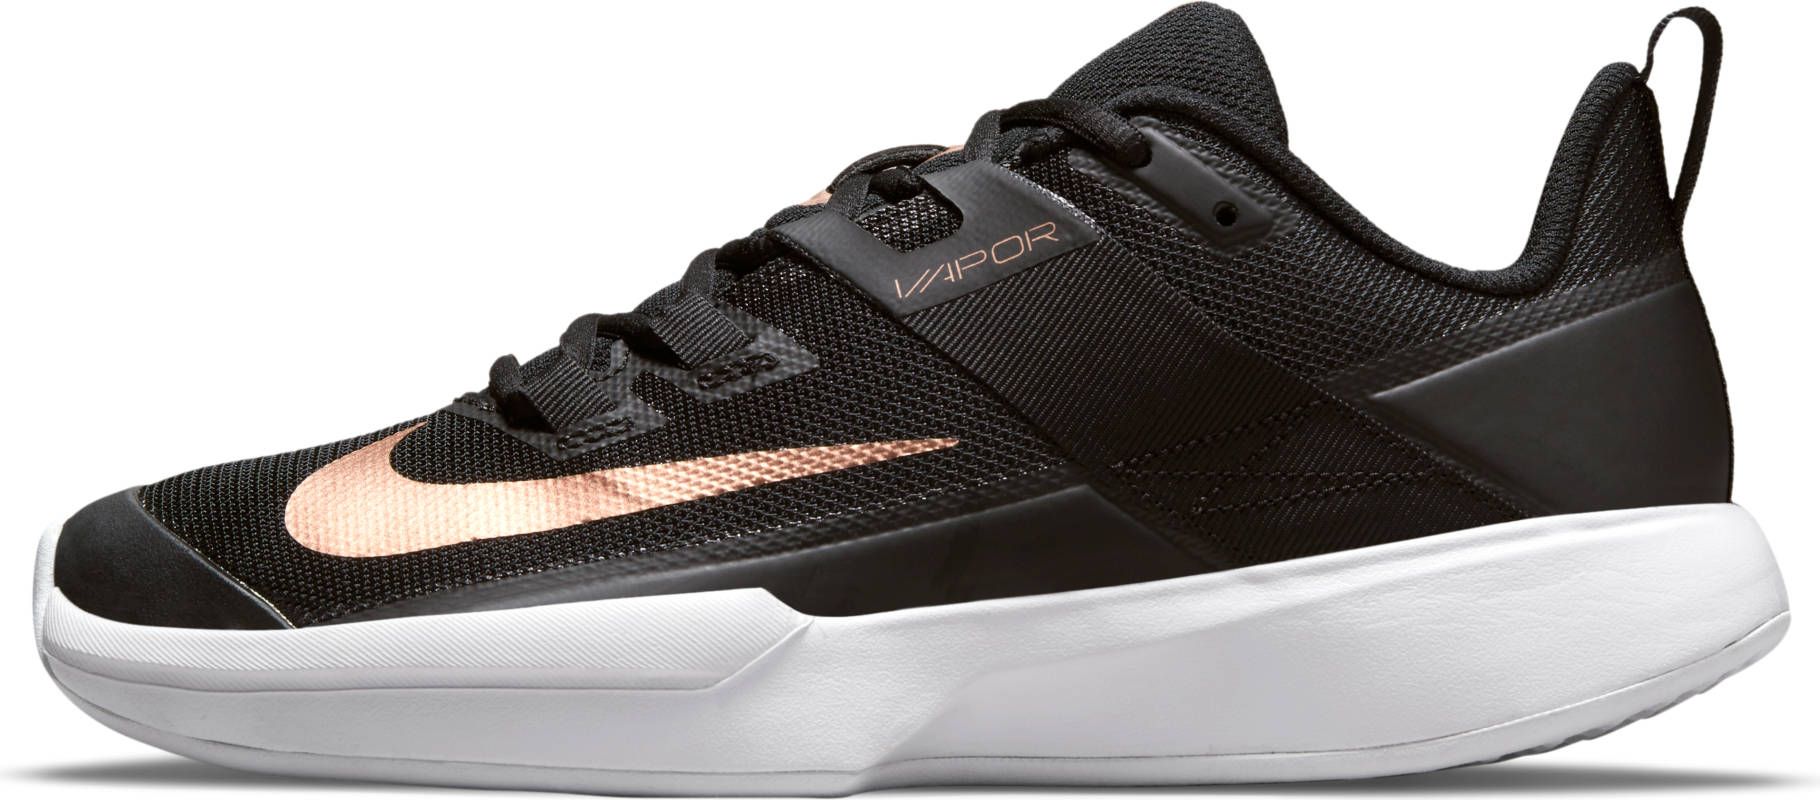 Nike Vapor Lite Women's Hard Court Tennis Shoes